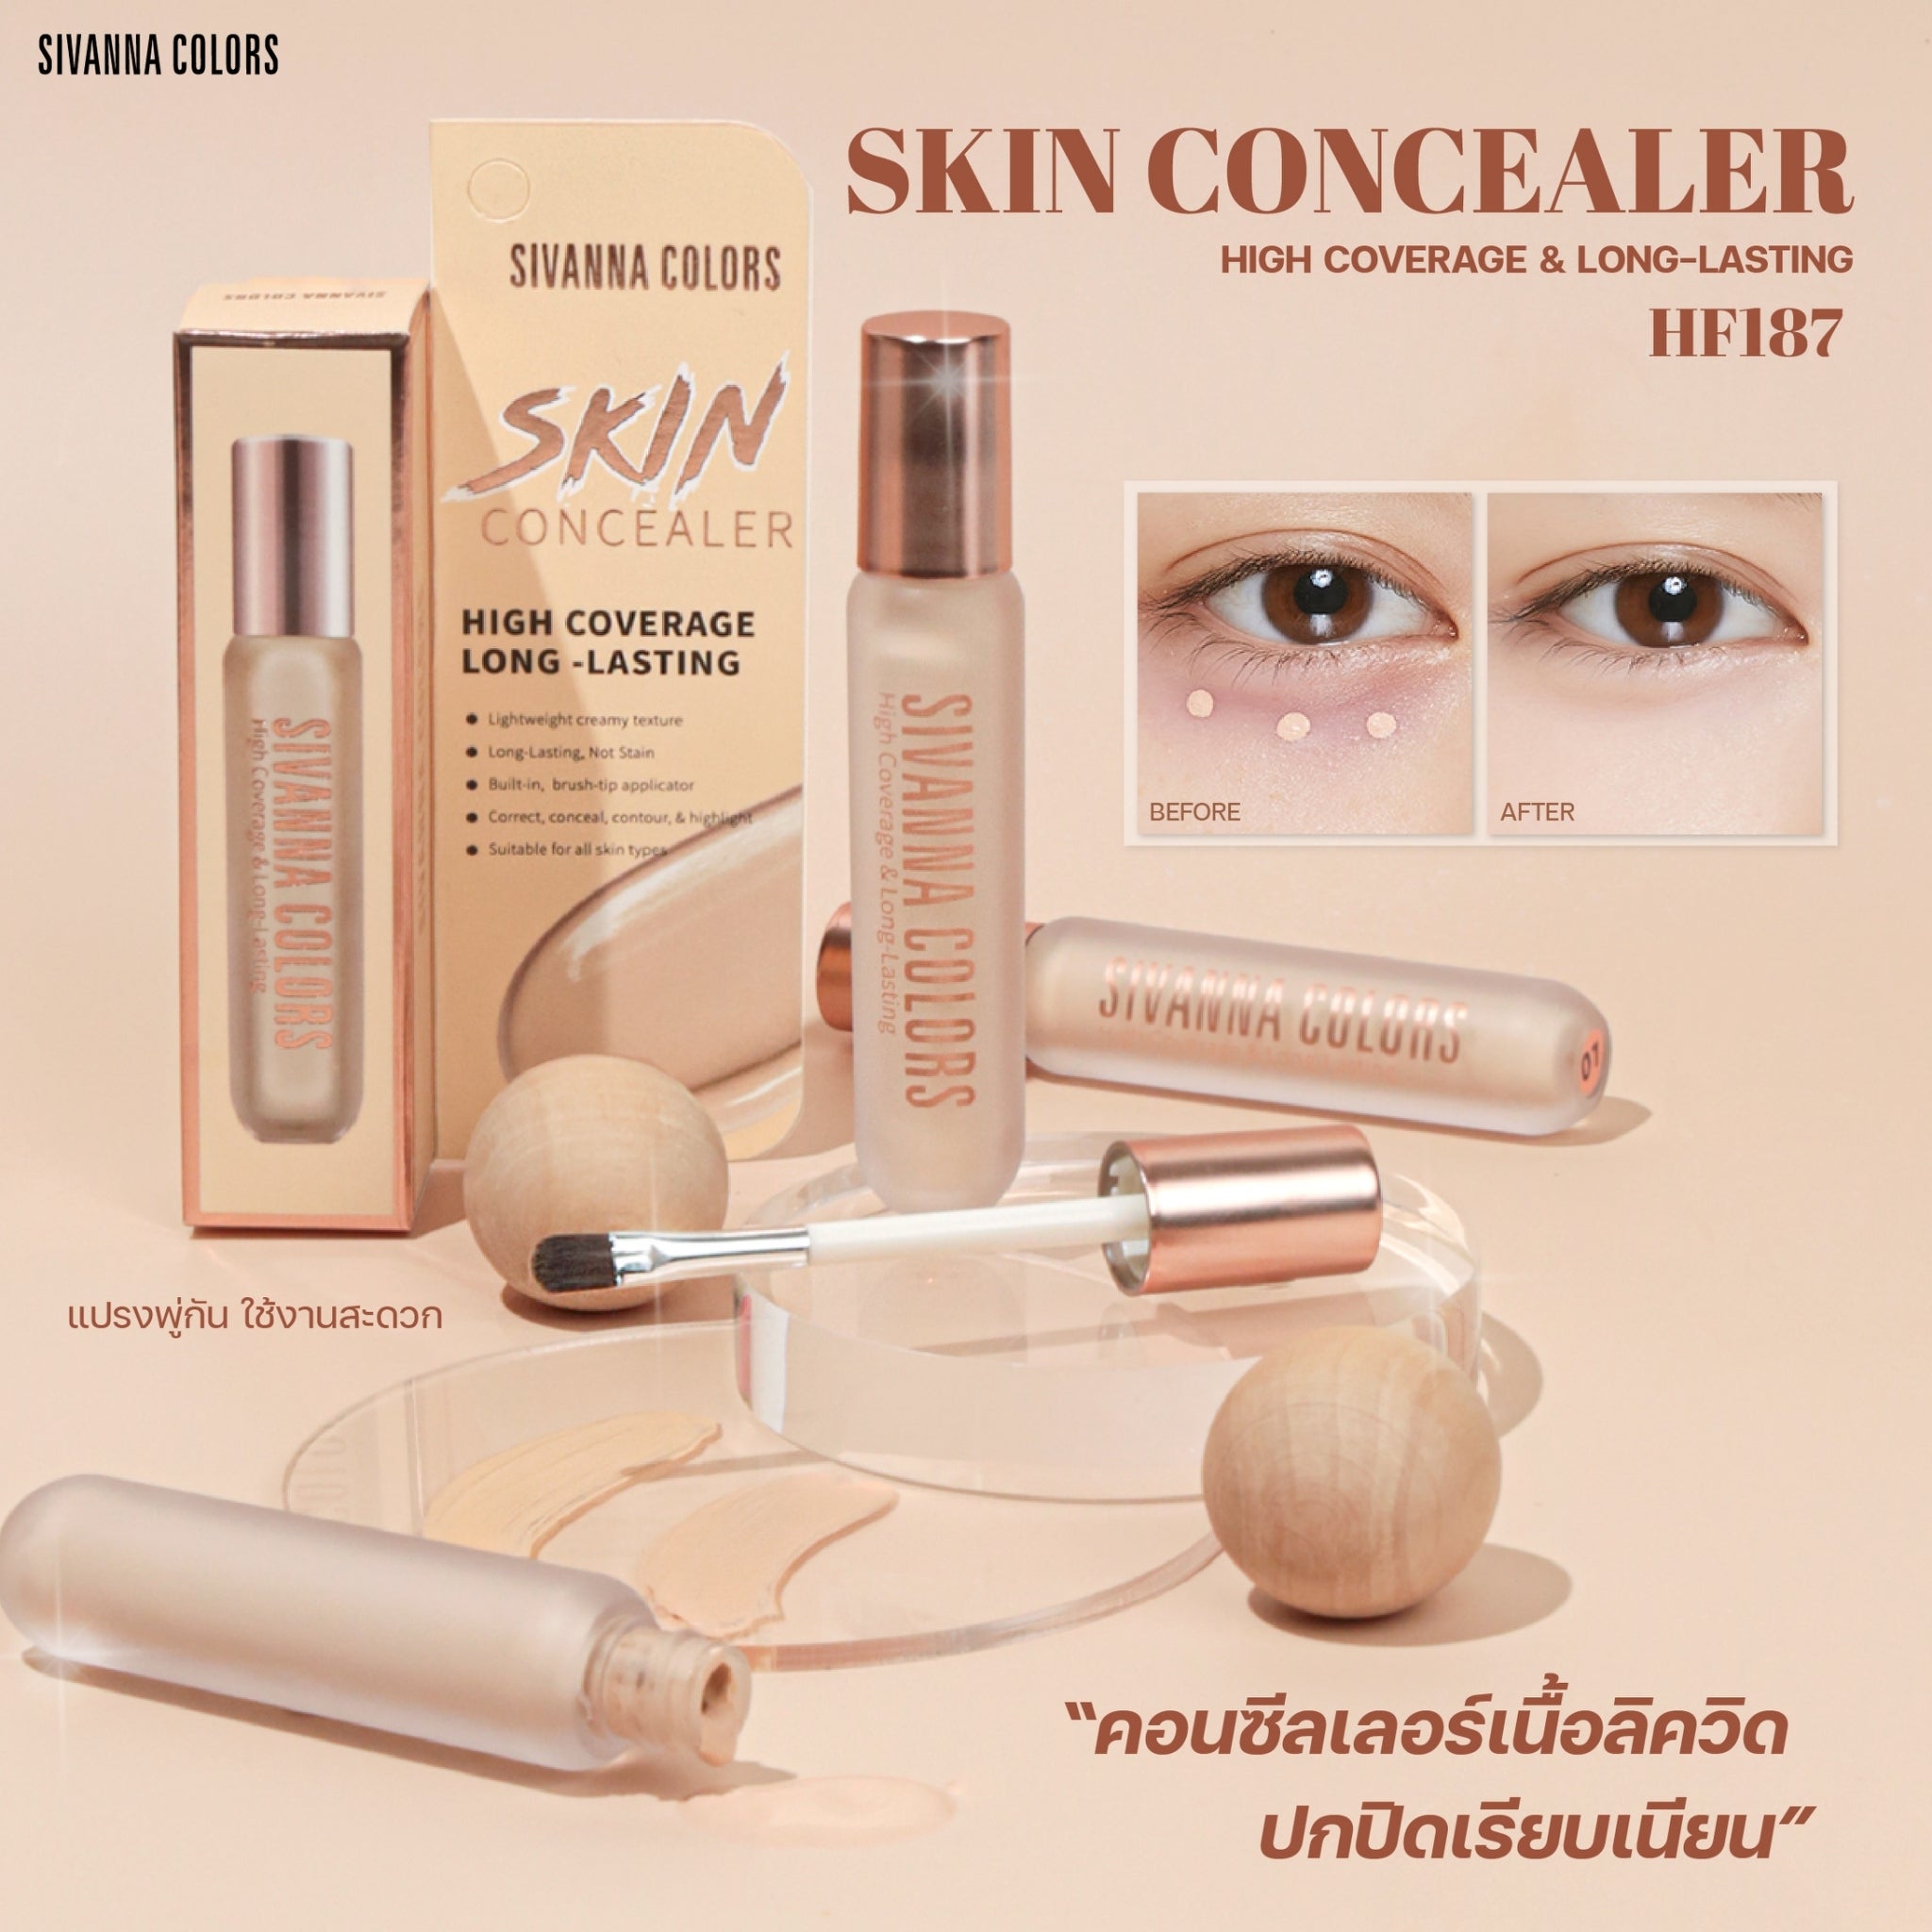 Sivanna Skin Concealer High Coverage & Long-Lasting #HF187 : ซิวานน่า คอนซีลเลอร์ x 1 ชิ้น